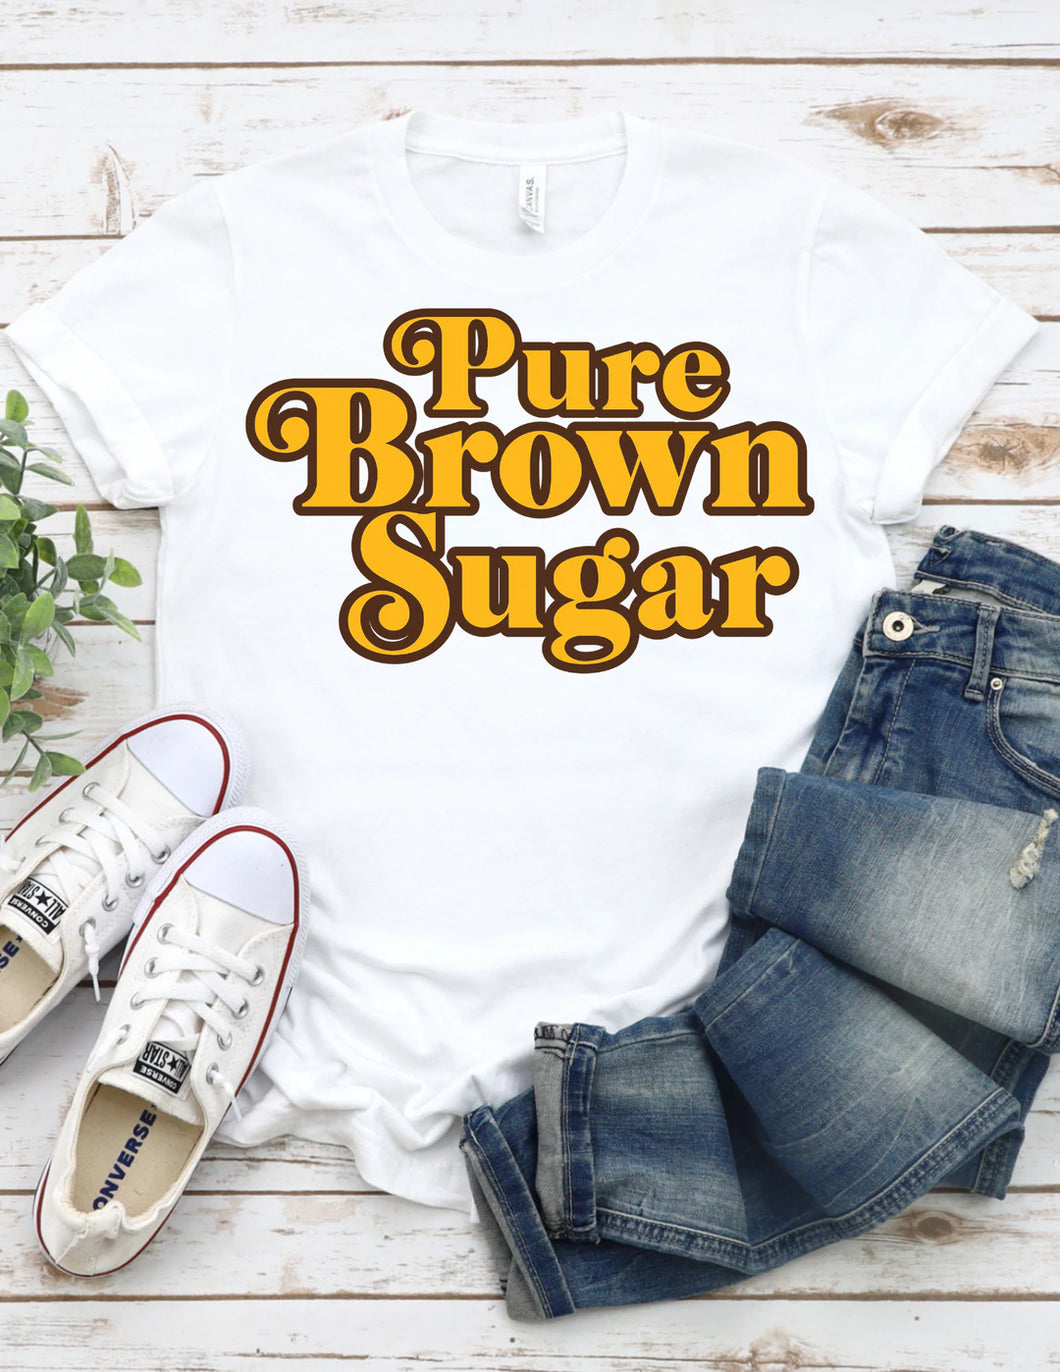 Pure brown sugar